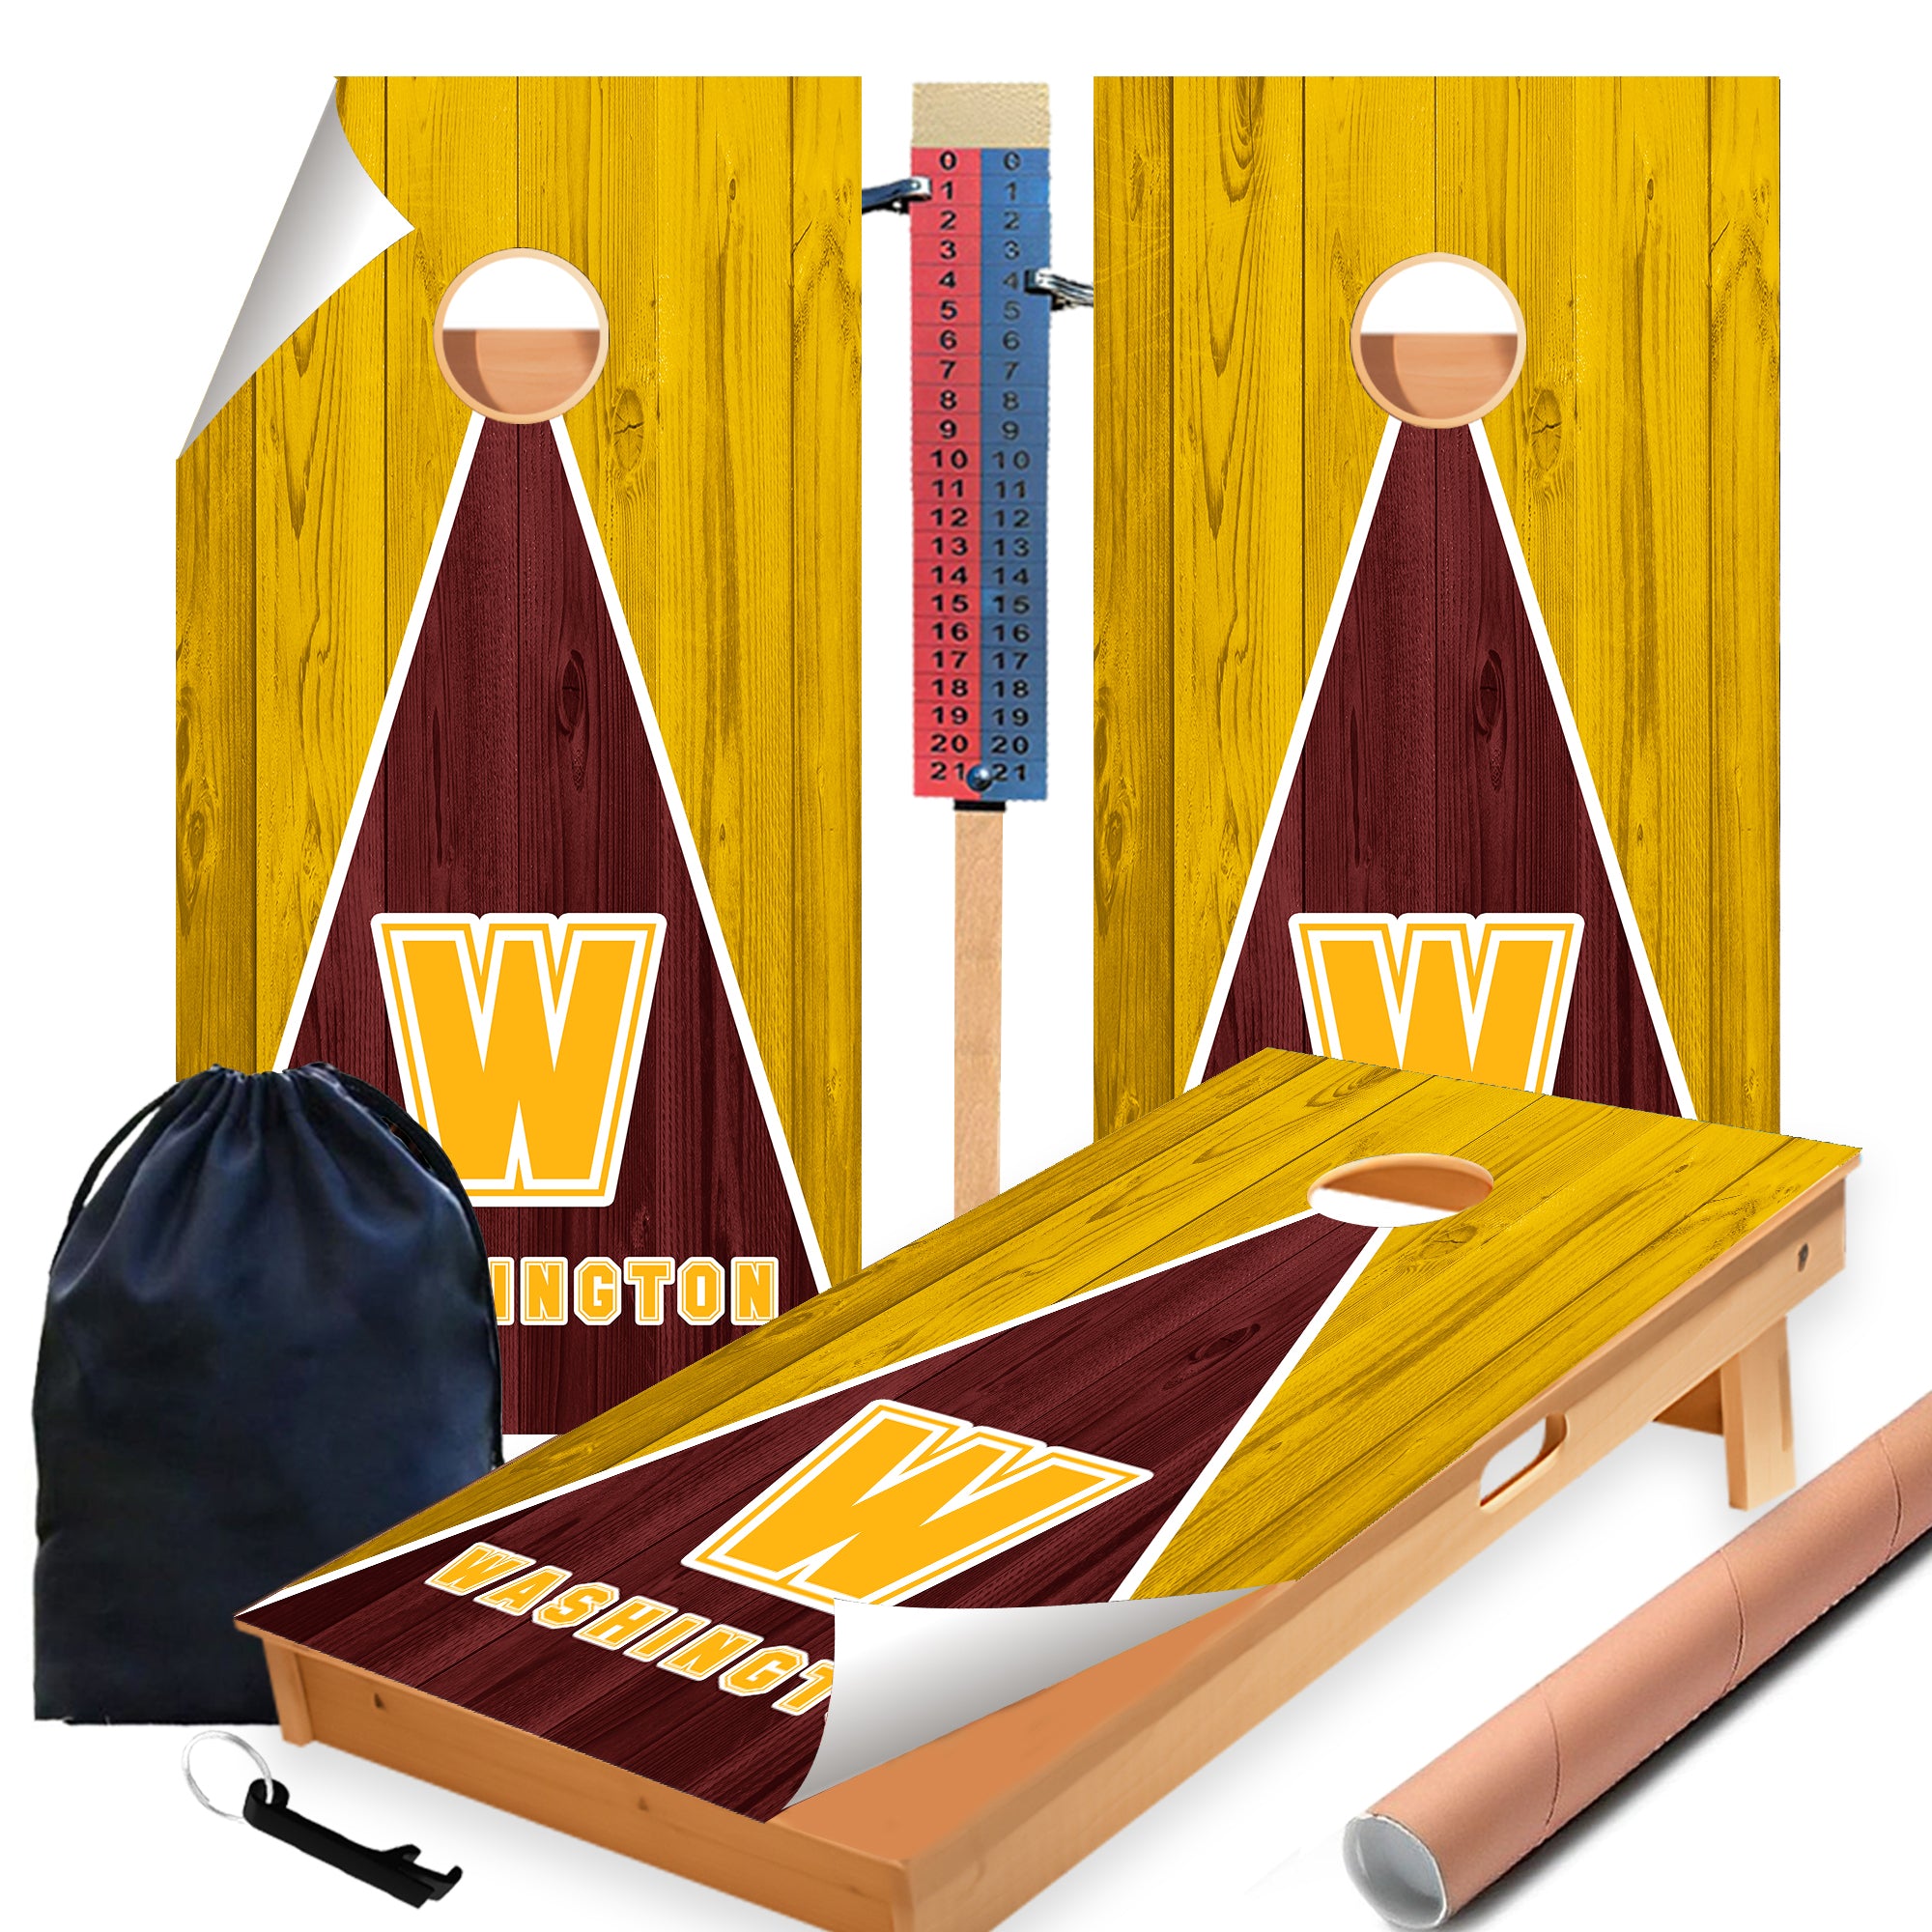 Washington Football Cornhole Boards Wraps (Set of 2)